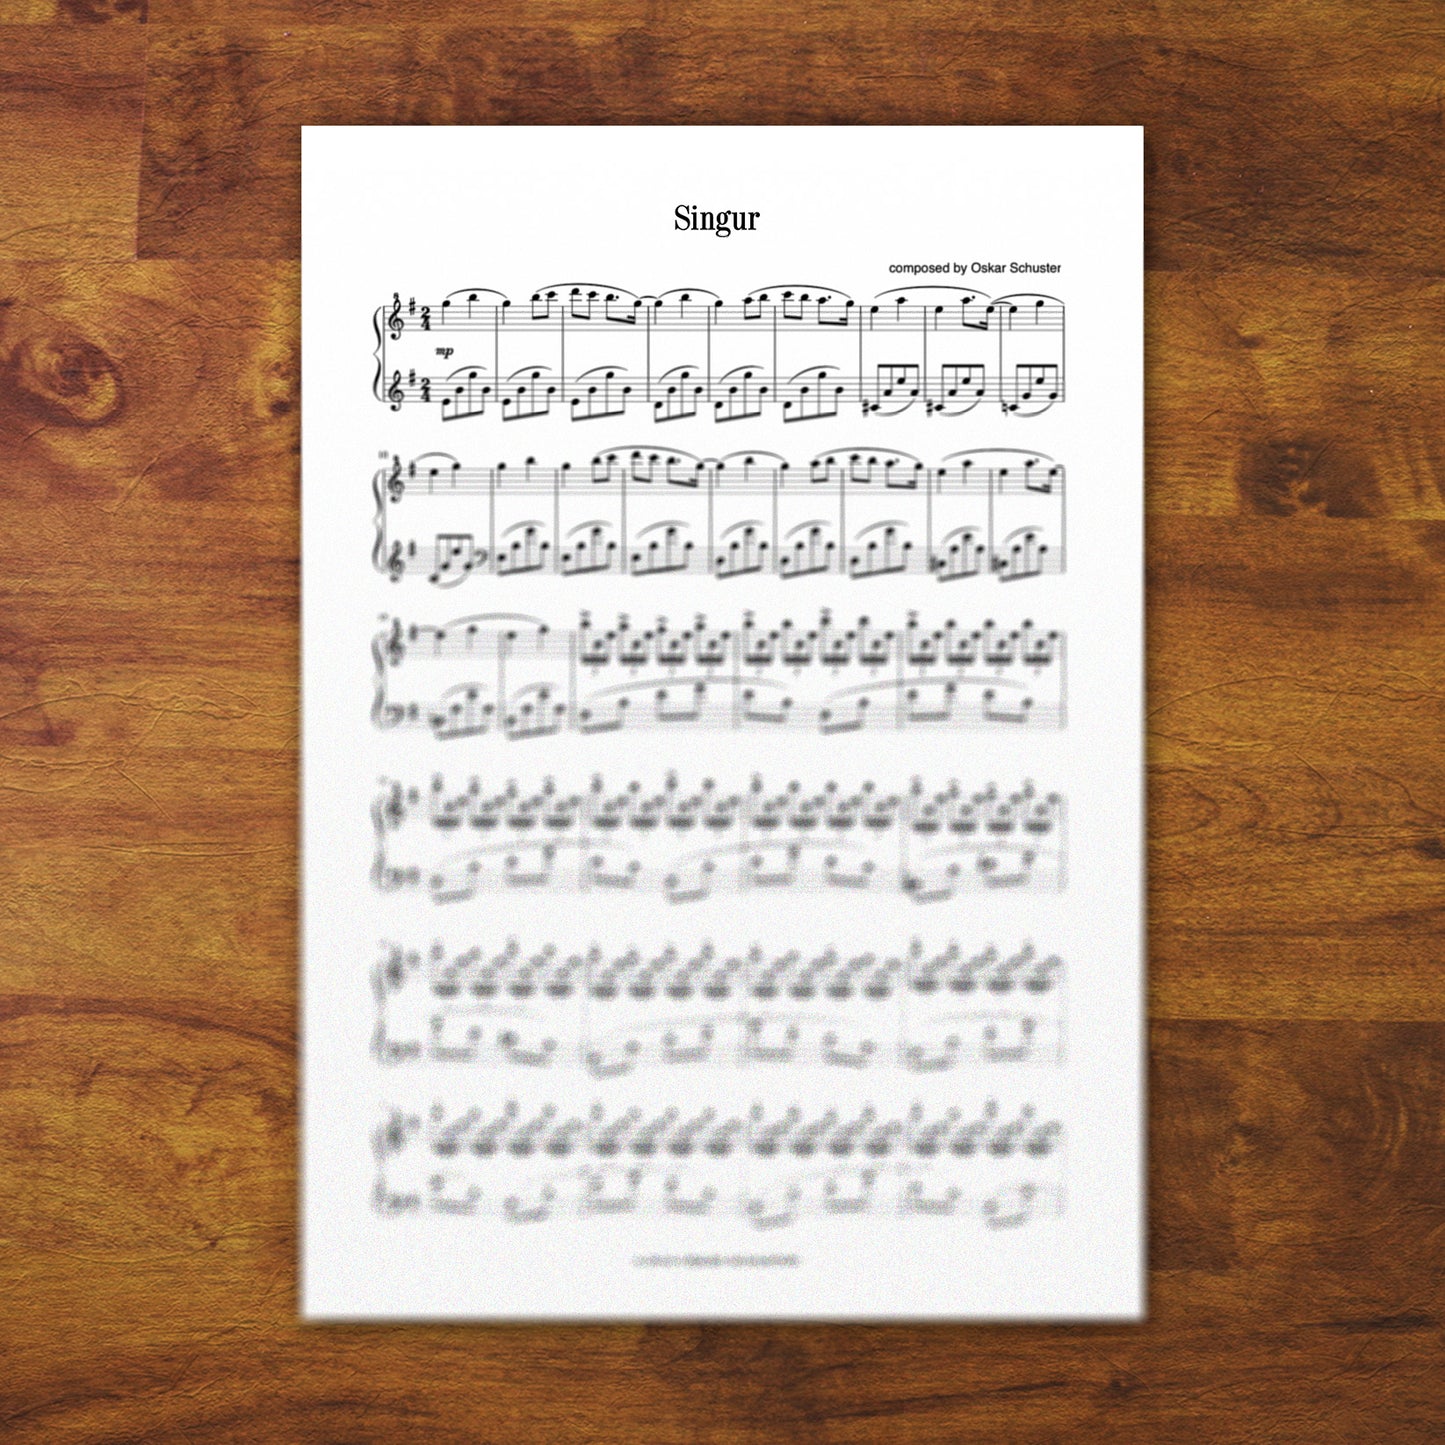 Piano Sheets "Singur"